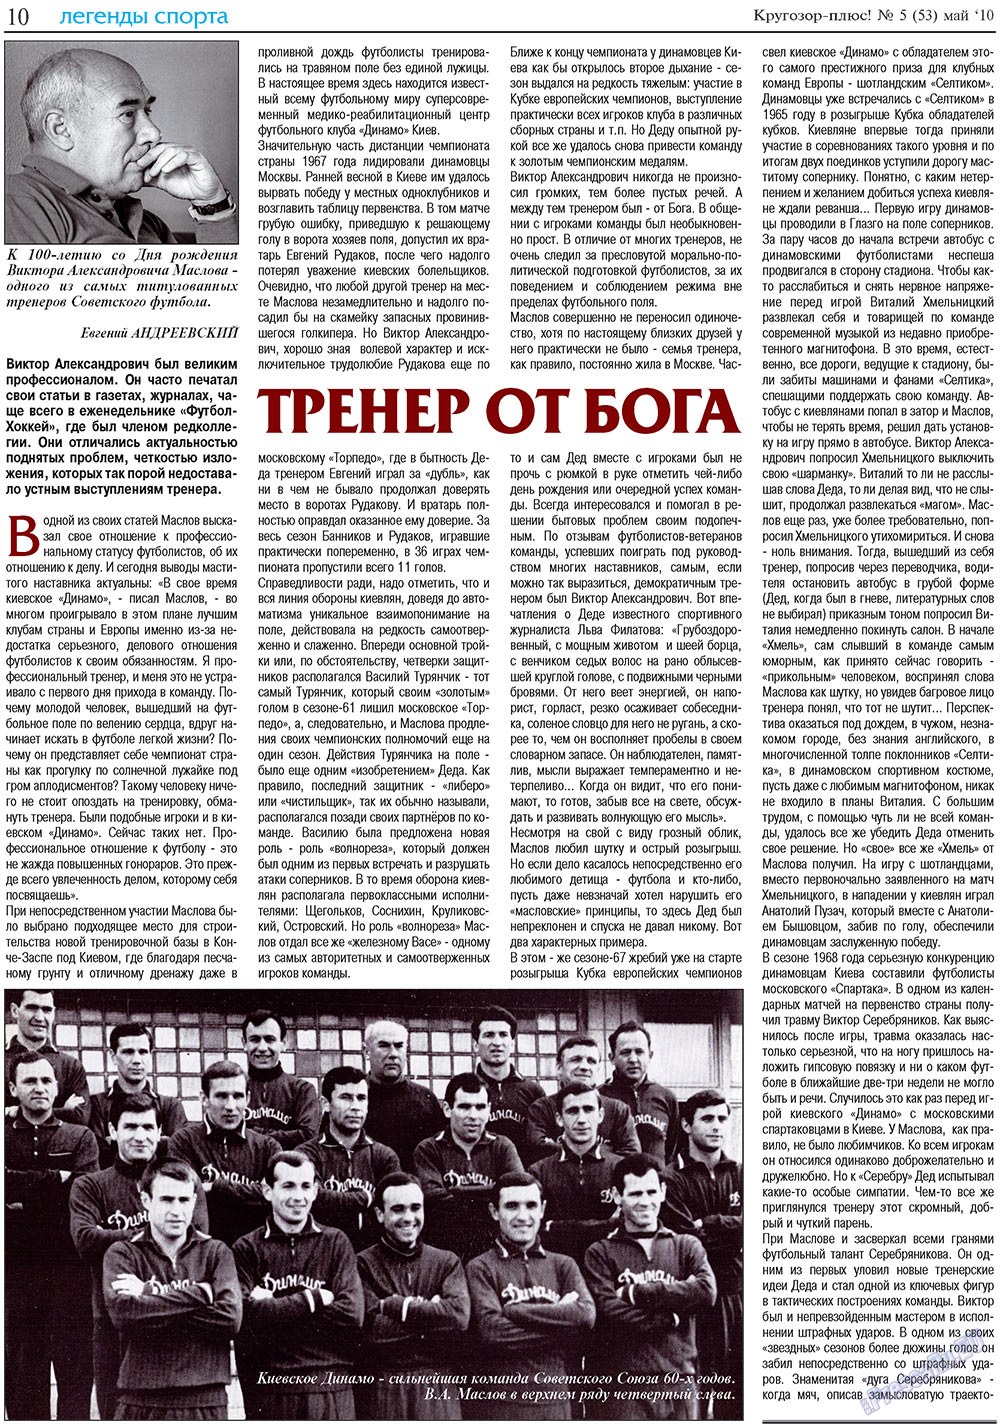 Кругозор плюс! (газета). 2010 год, номер 5, стр. 26